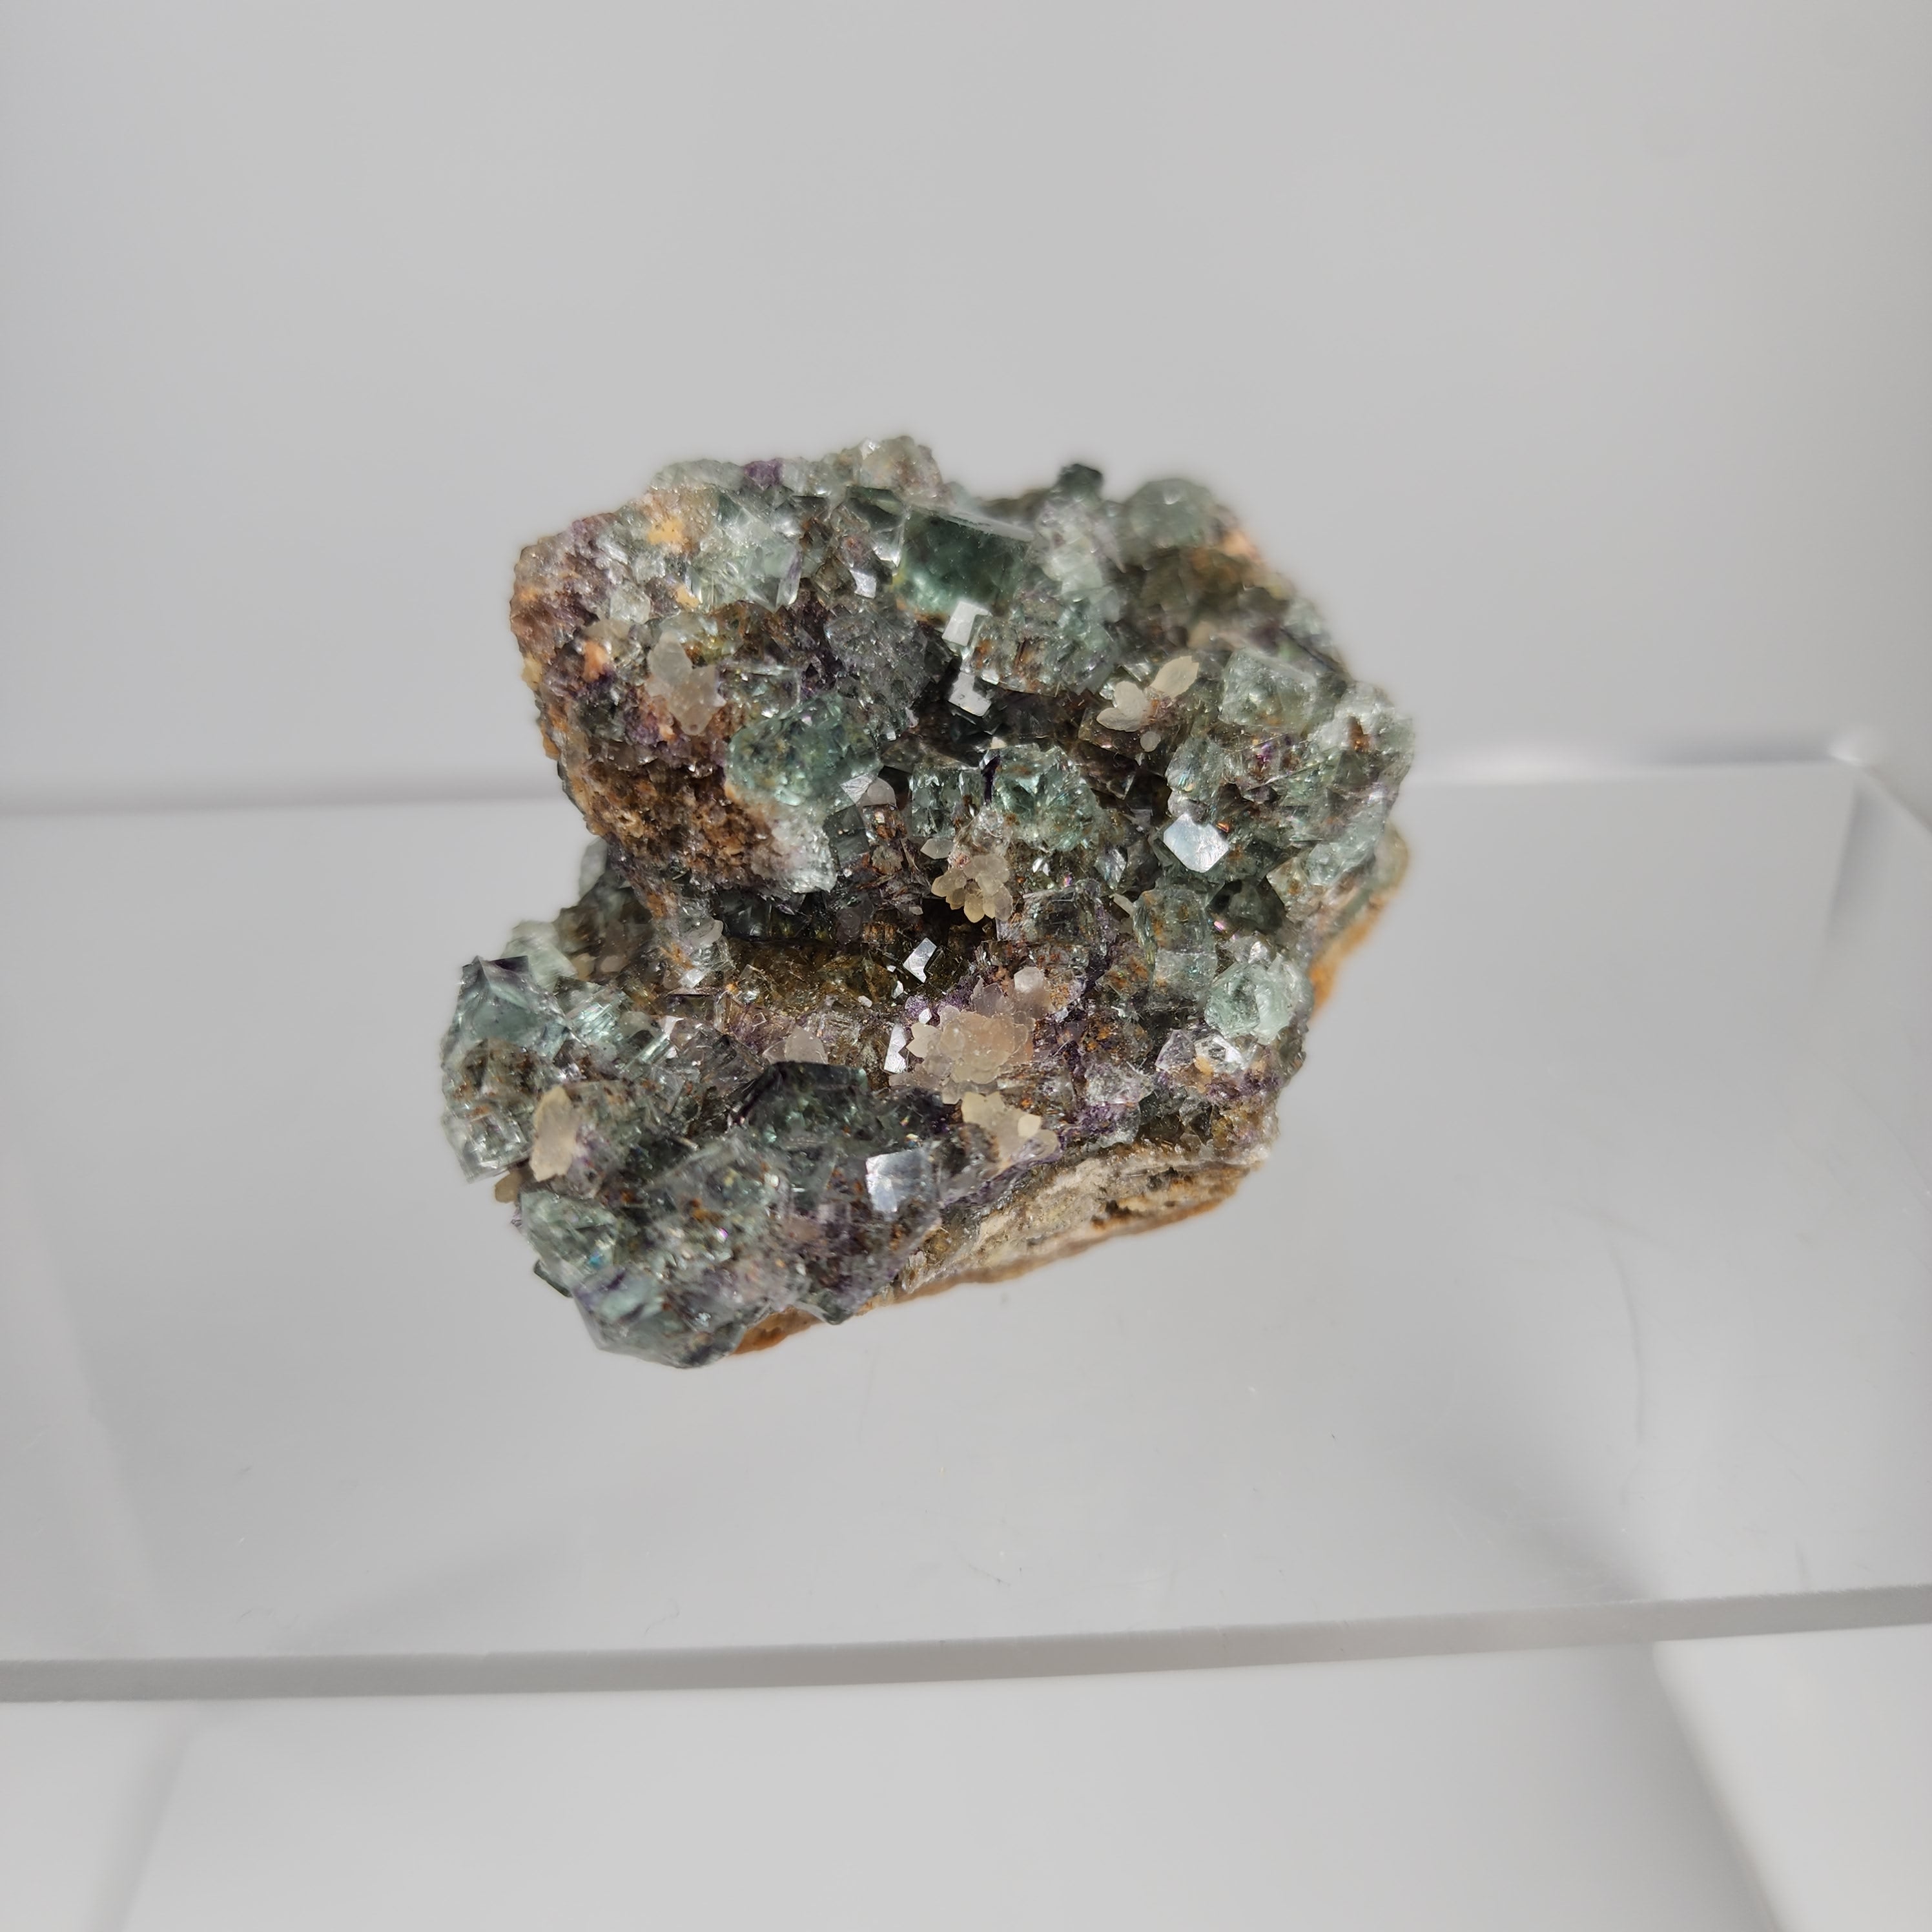 Okorusu Fluorite Specimen #11 from Okorusu Mine, Namibia